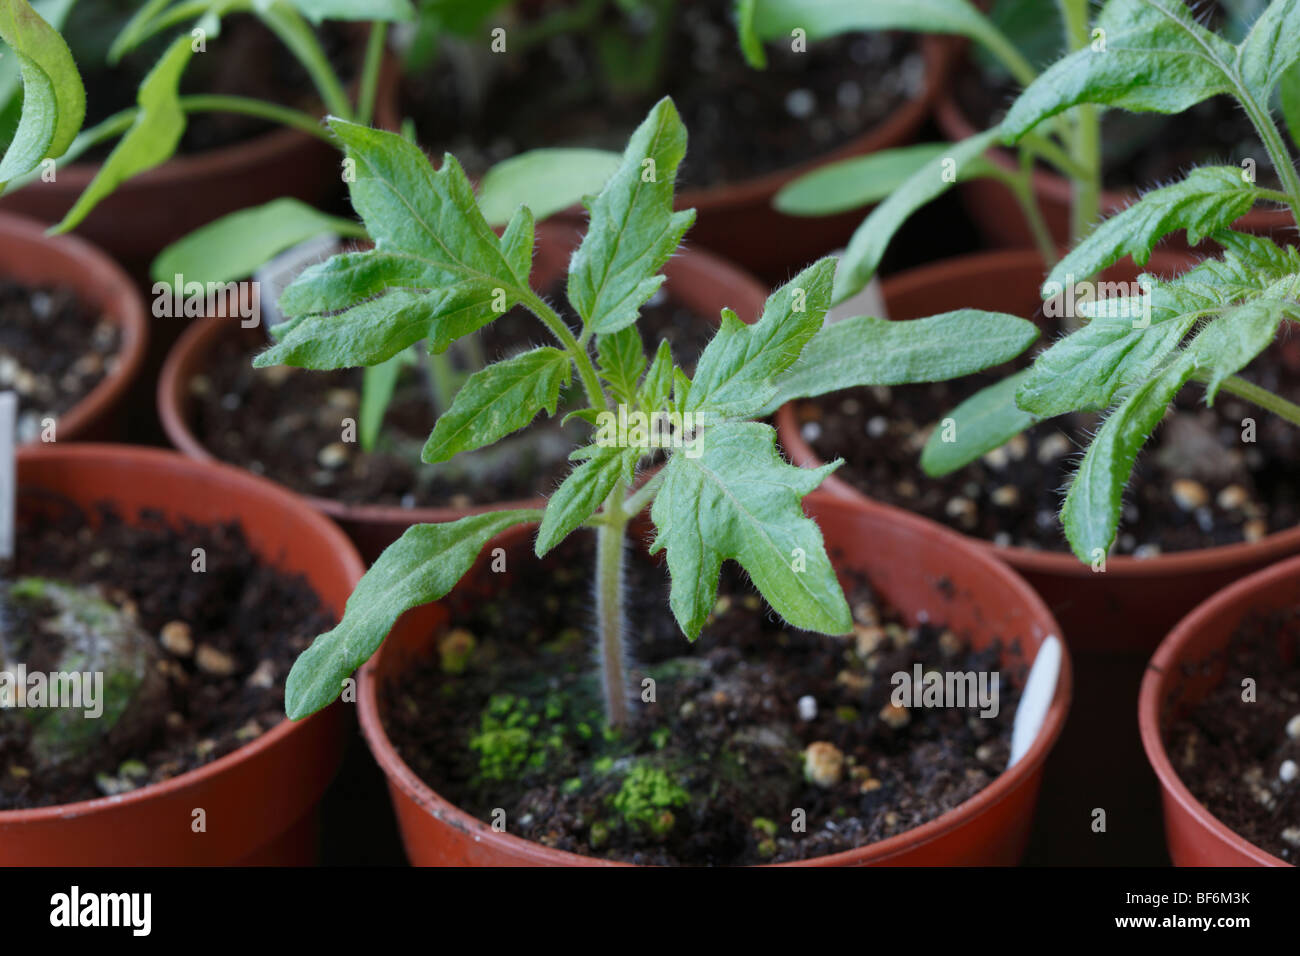 Tomato plants in flower pots Solanum lycopersicum Stock Photo